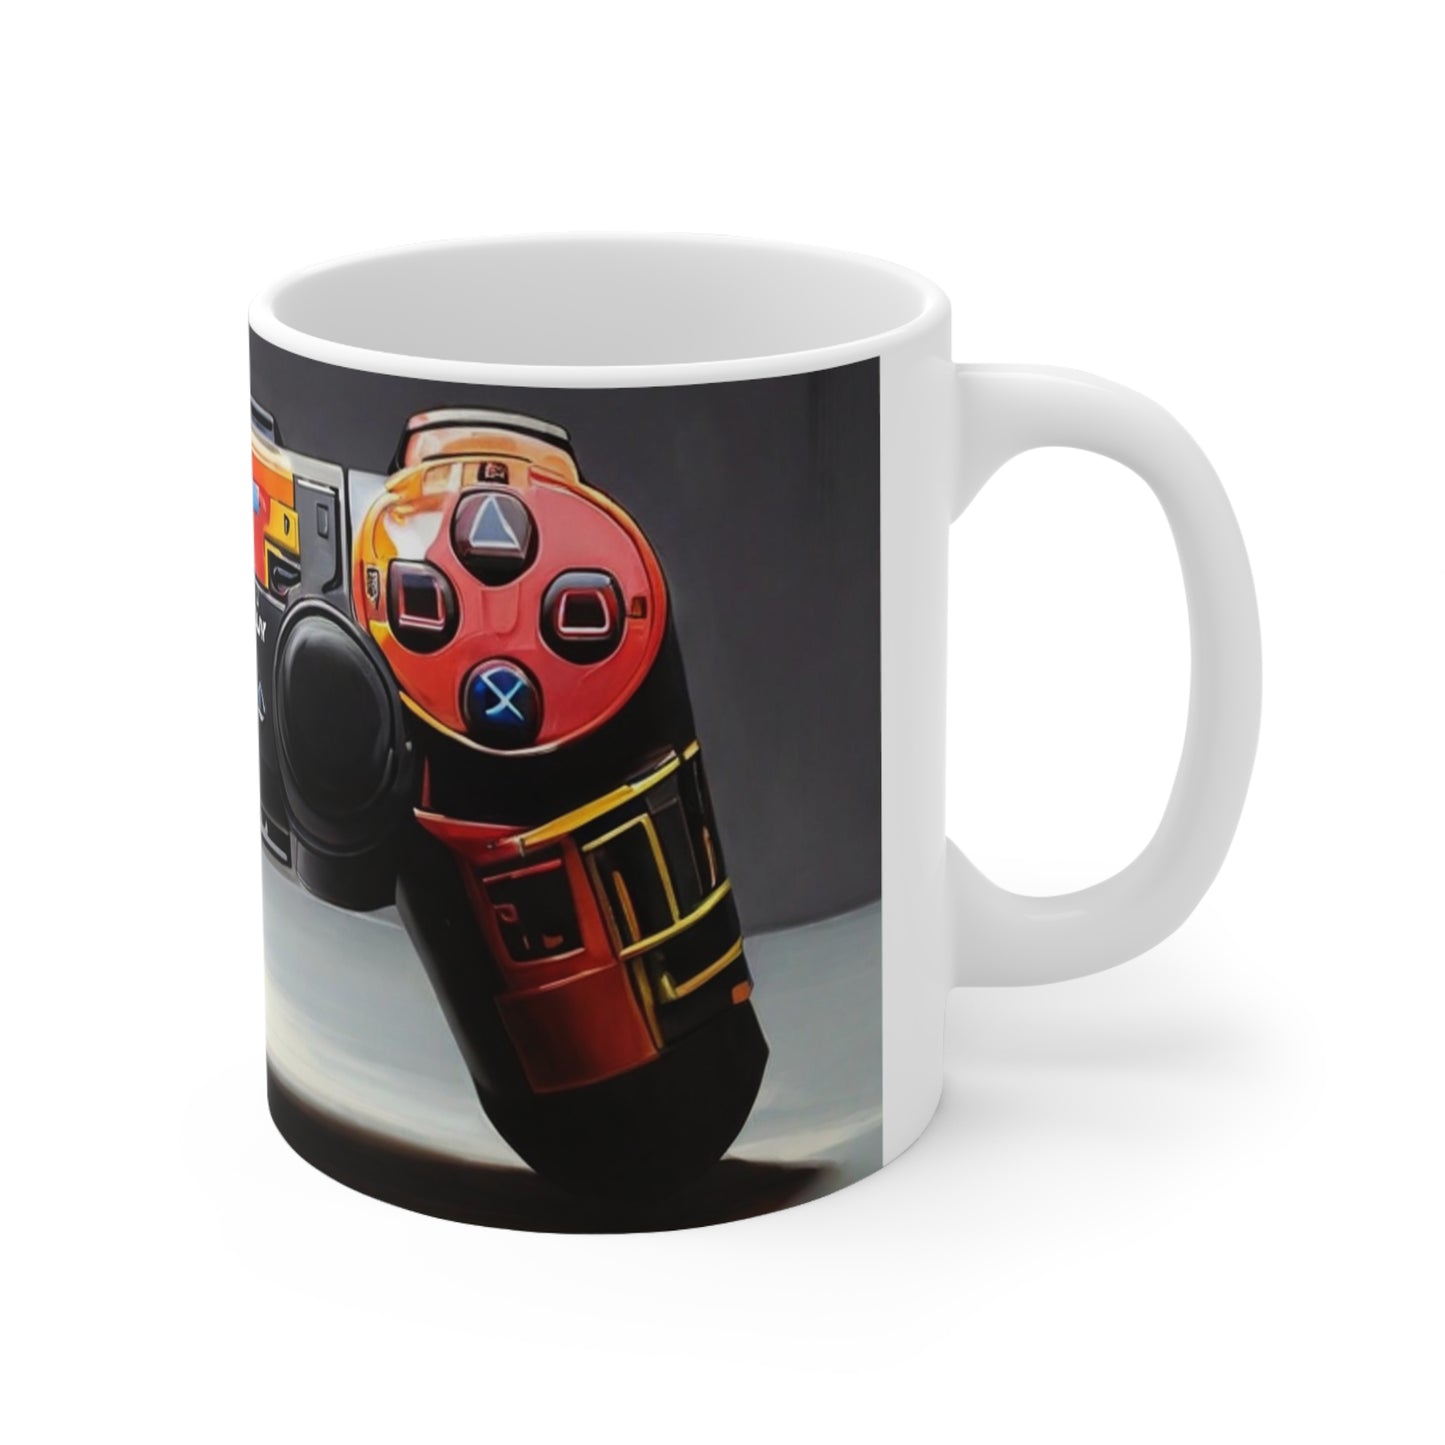 PlayStation Controller Artwork Mug - Ceramic Coffee Mug 11oz